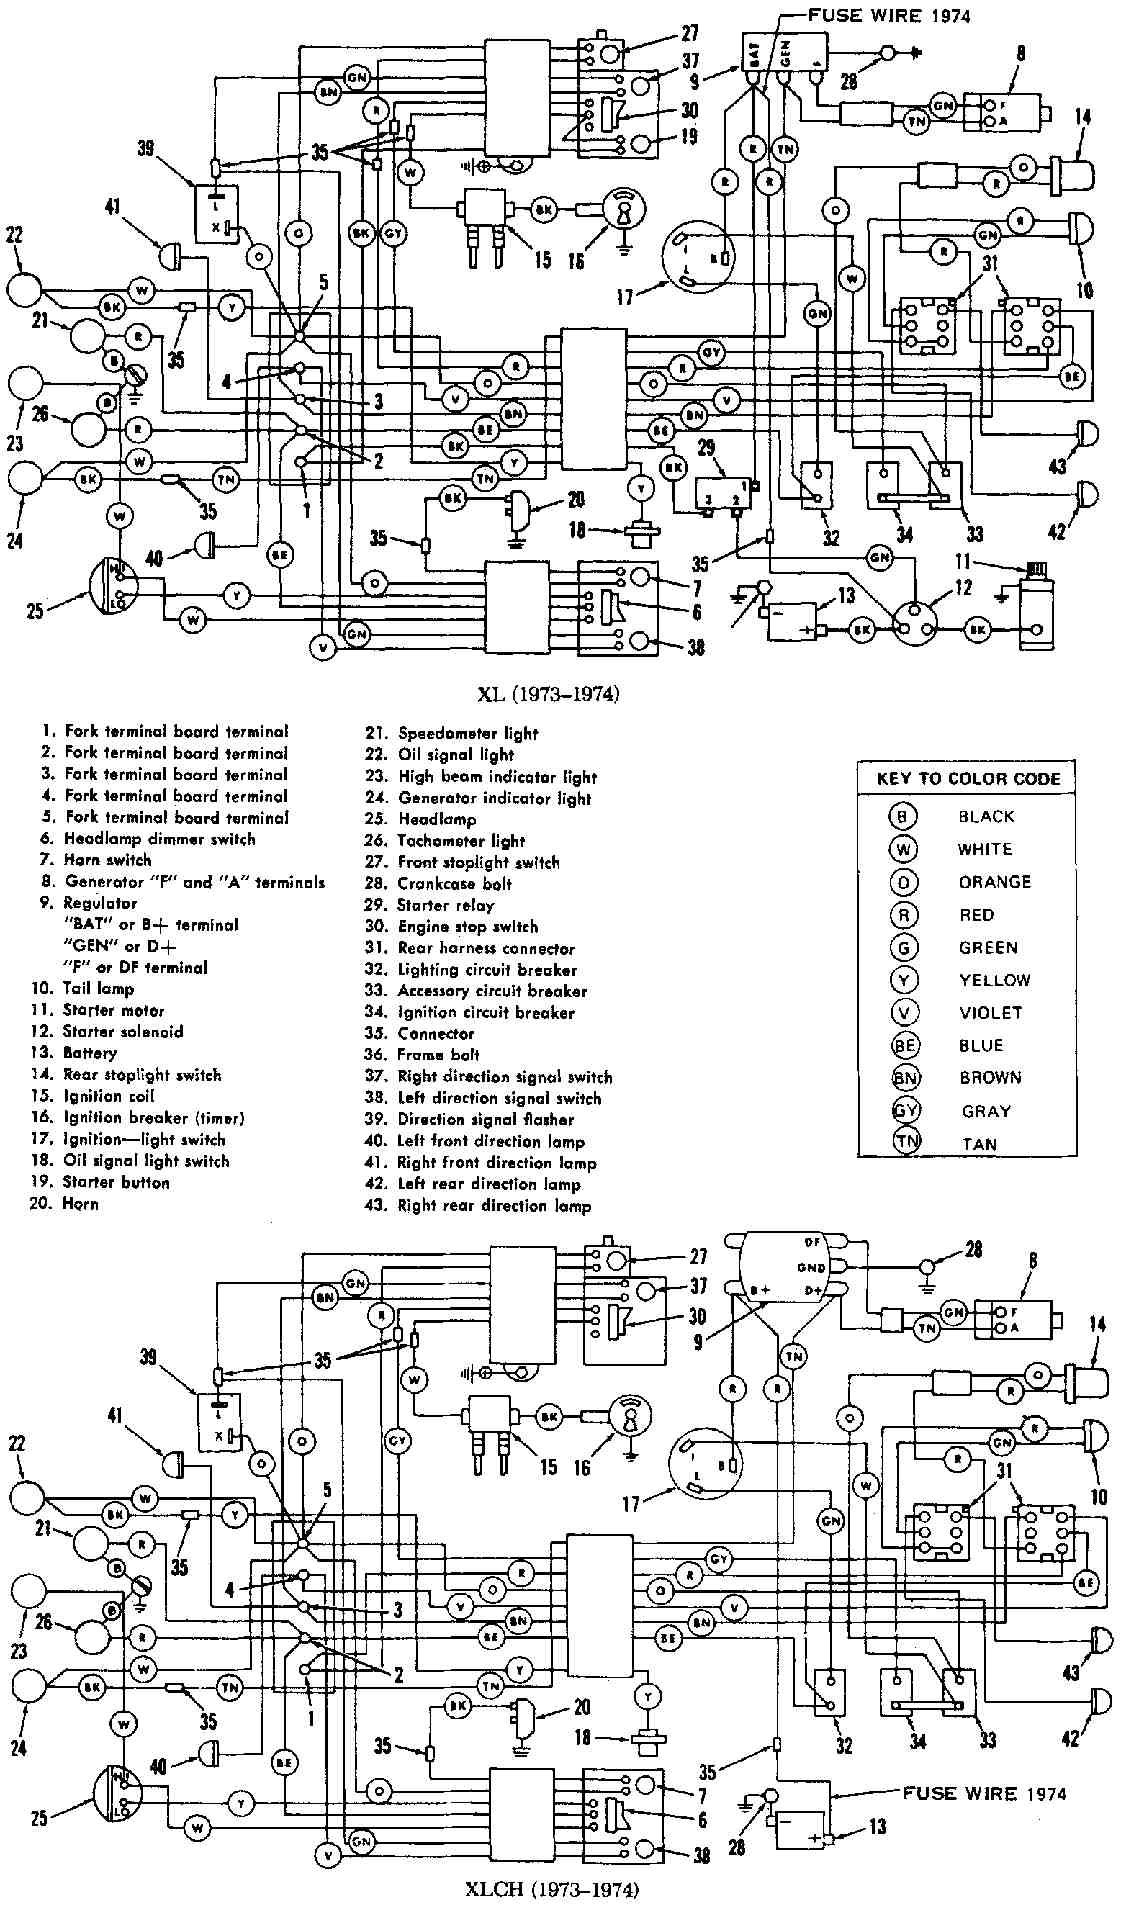 HARLEY DAVIDSON - Motorcycles Manual Pdf, Wiring Diagram & Fault Codes Basic Harley Wiring Diagram MOTORCYCLE Manuals PDF & Wiring Diagrams